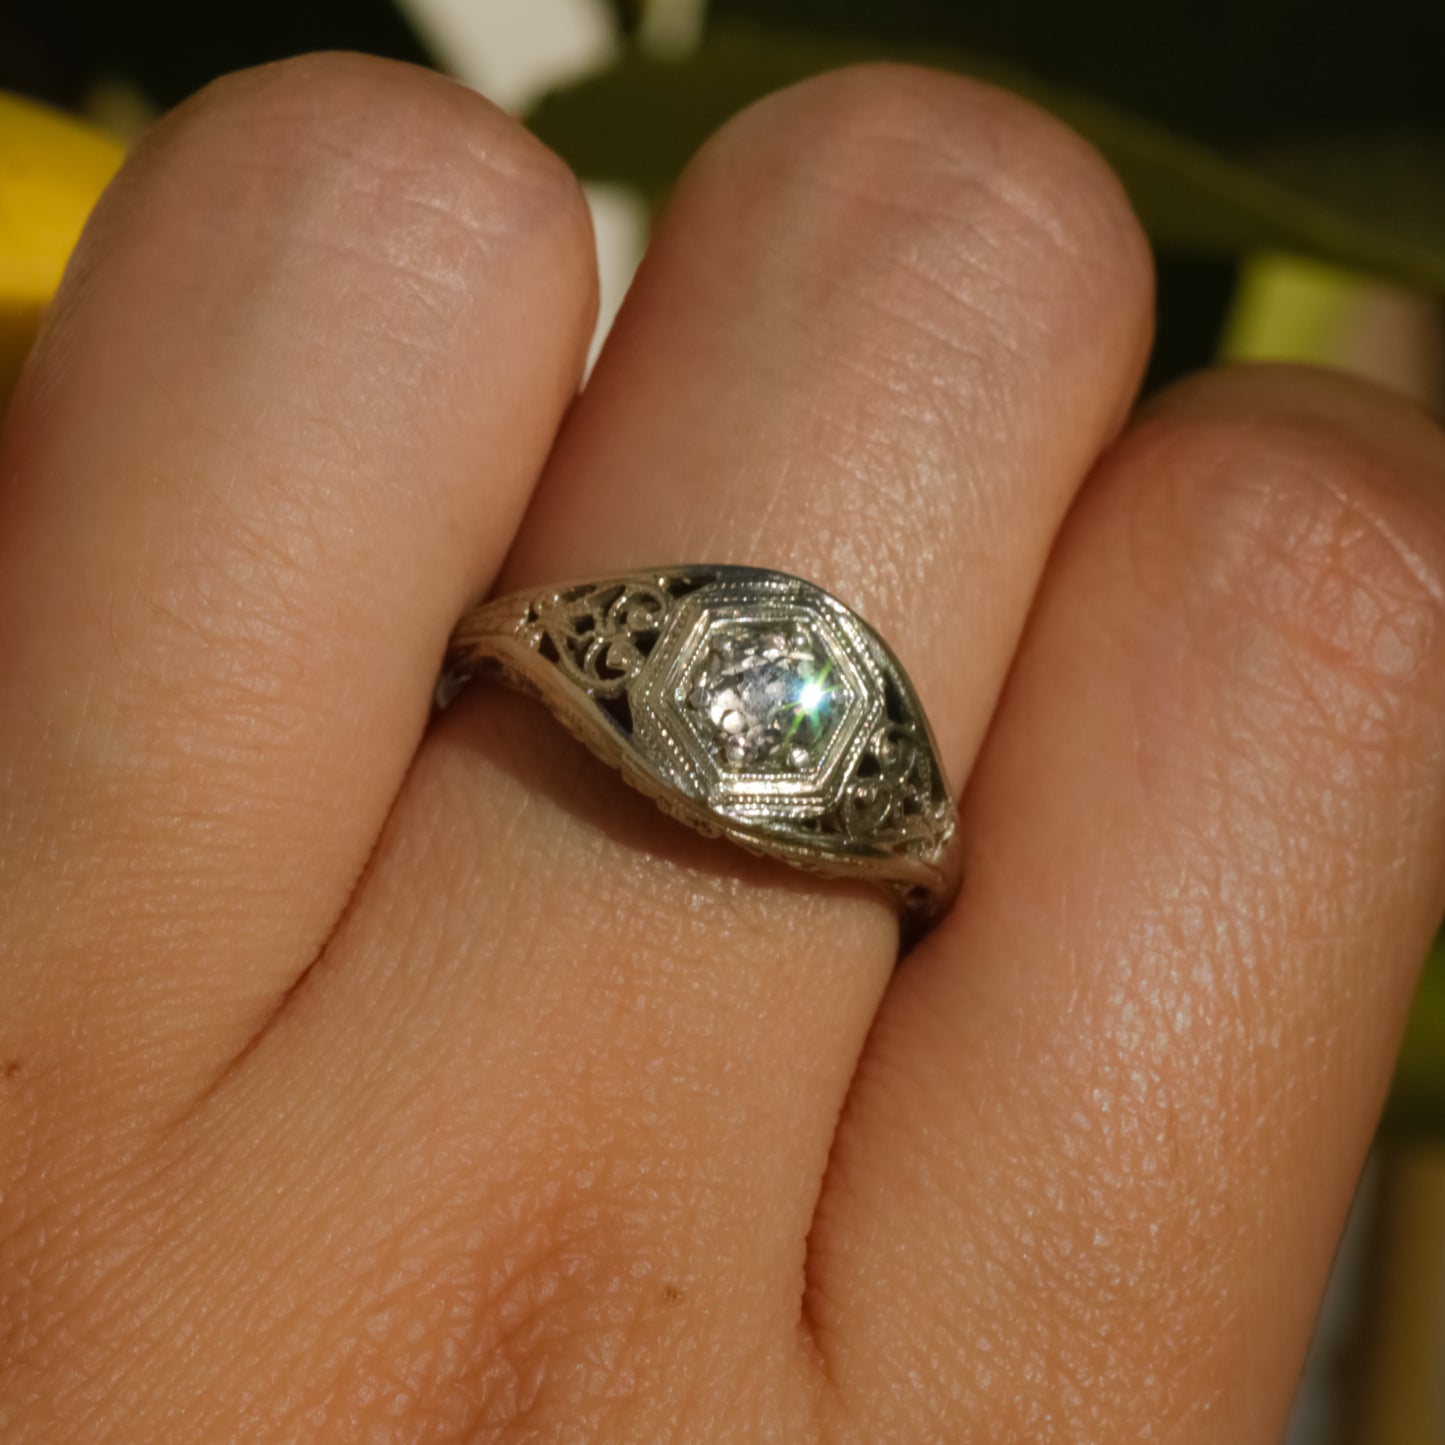 Art Deco Filigree Solitaire Diamond Ring Sz 5 3/4 18k